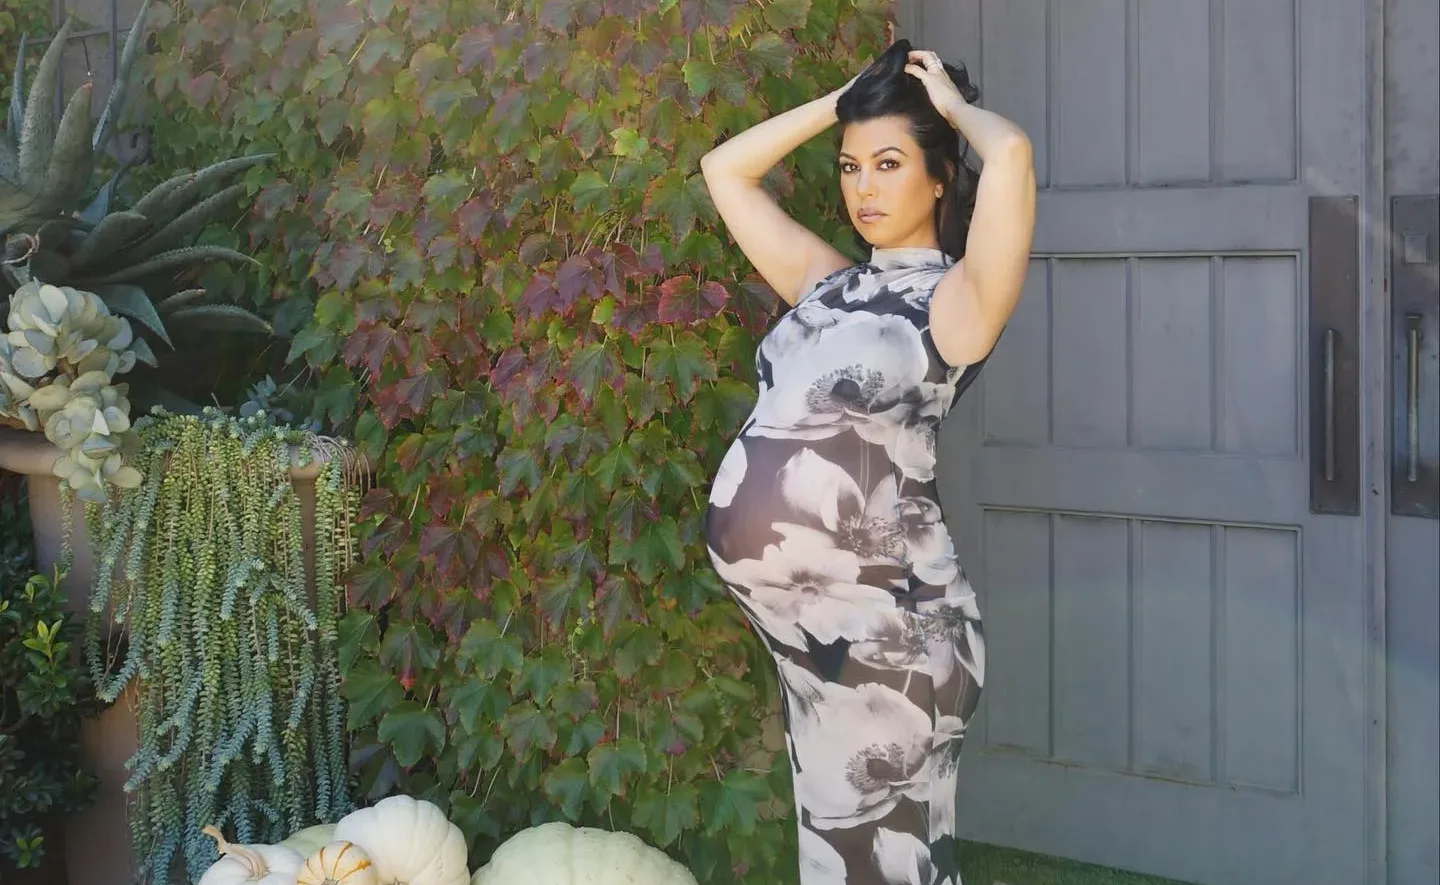 Kourtney Kardashian: Plant-Based Pregnancy Diet May Promote Prenatal Health